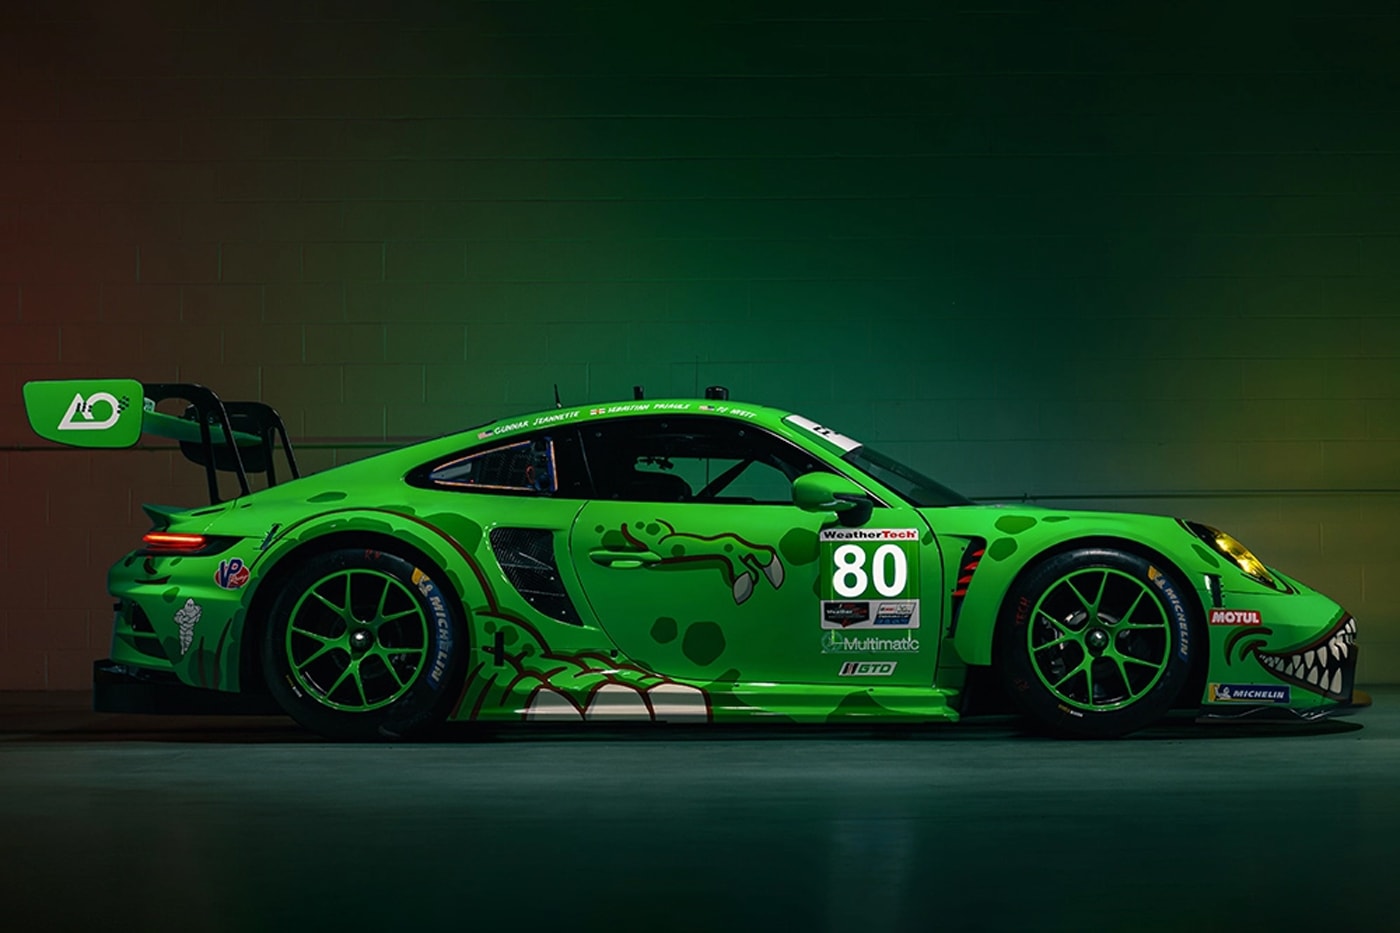 AO Racing Porsche 911 T Rex Livery Full Season GT3 Rawr pj hyett fia world endurance championship images info